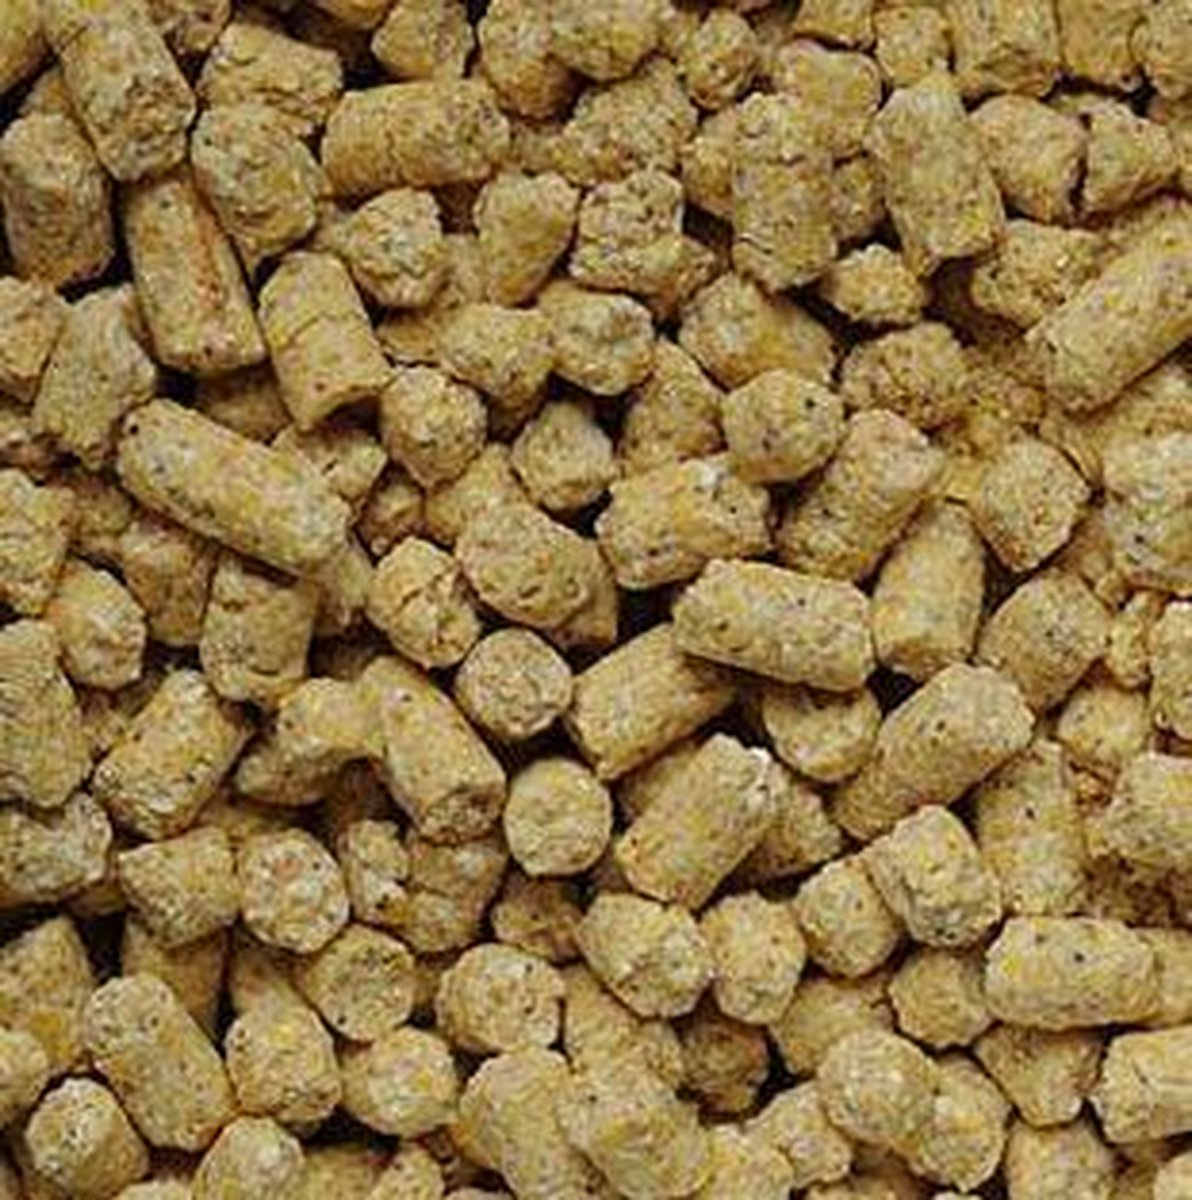 Babycorn pellets (ontsloten mais brok) 20kg - Grevers Voeders